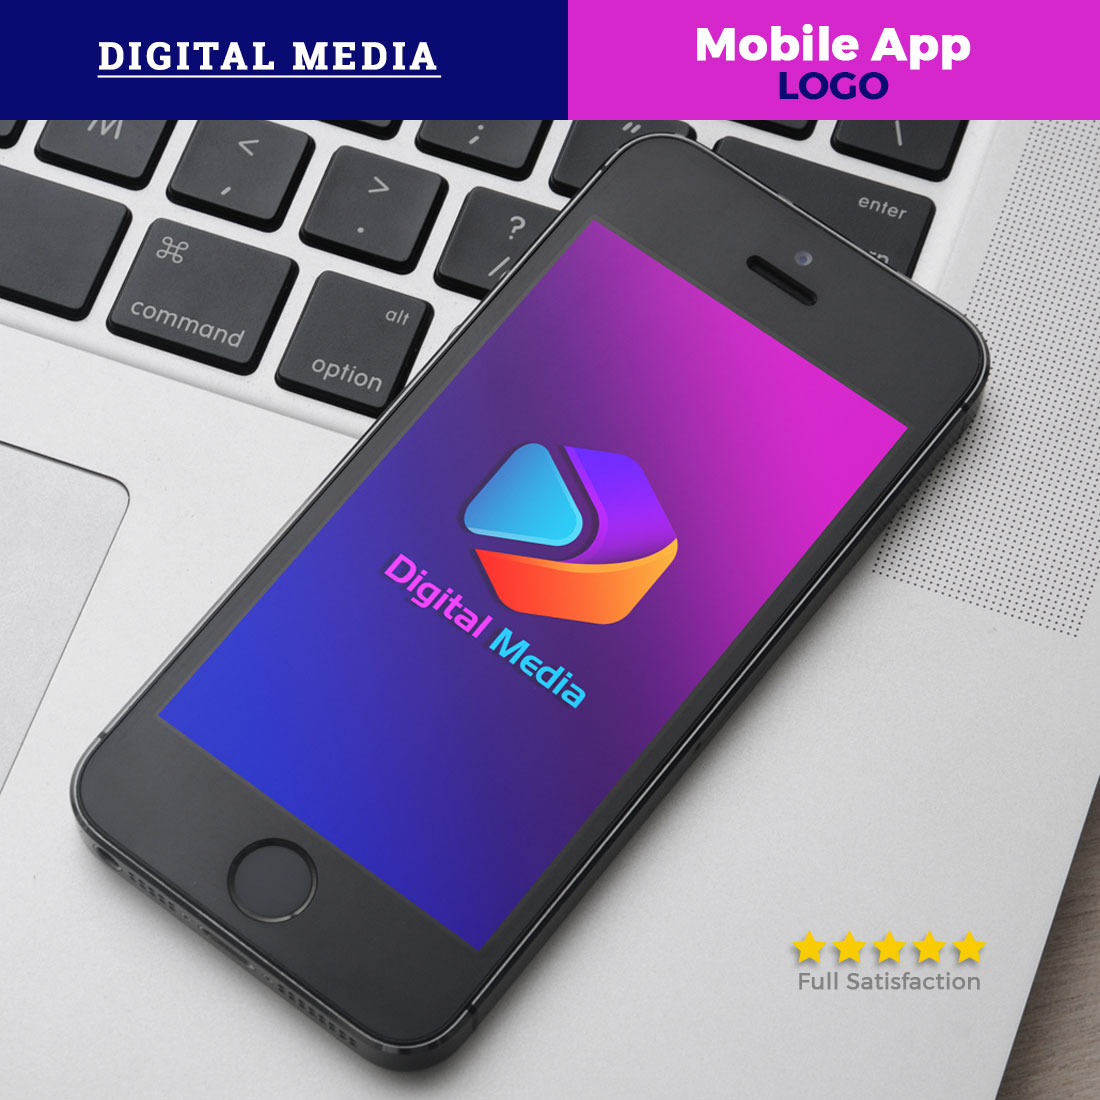 Media Mobile App Digital Logo Design cover image.